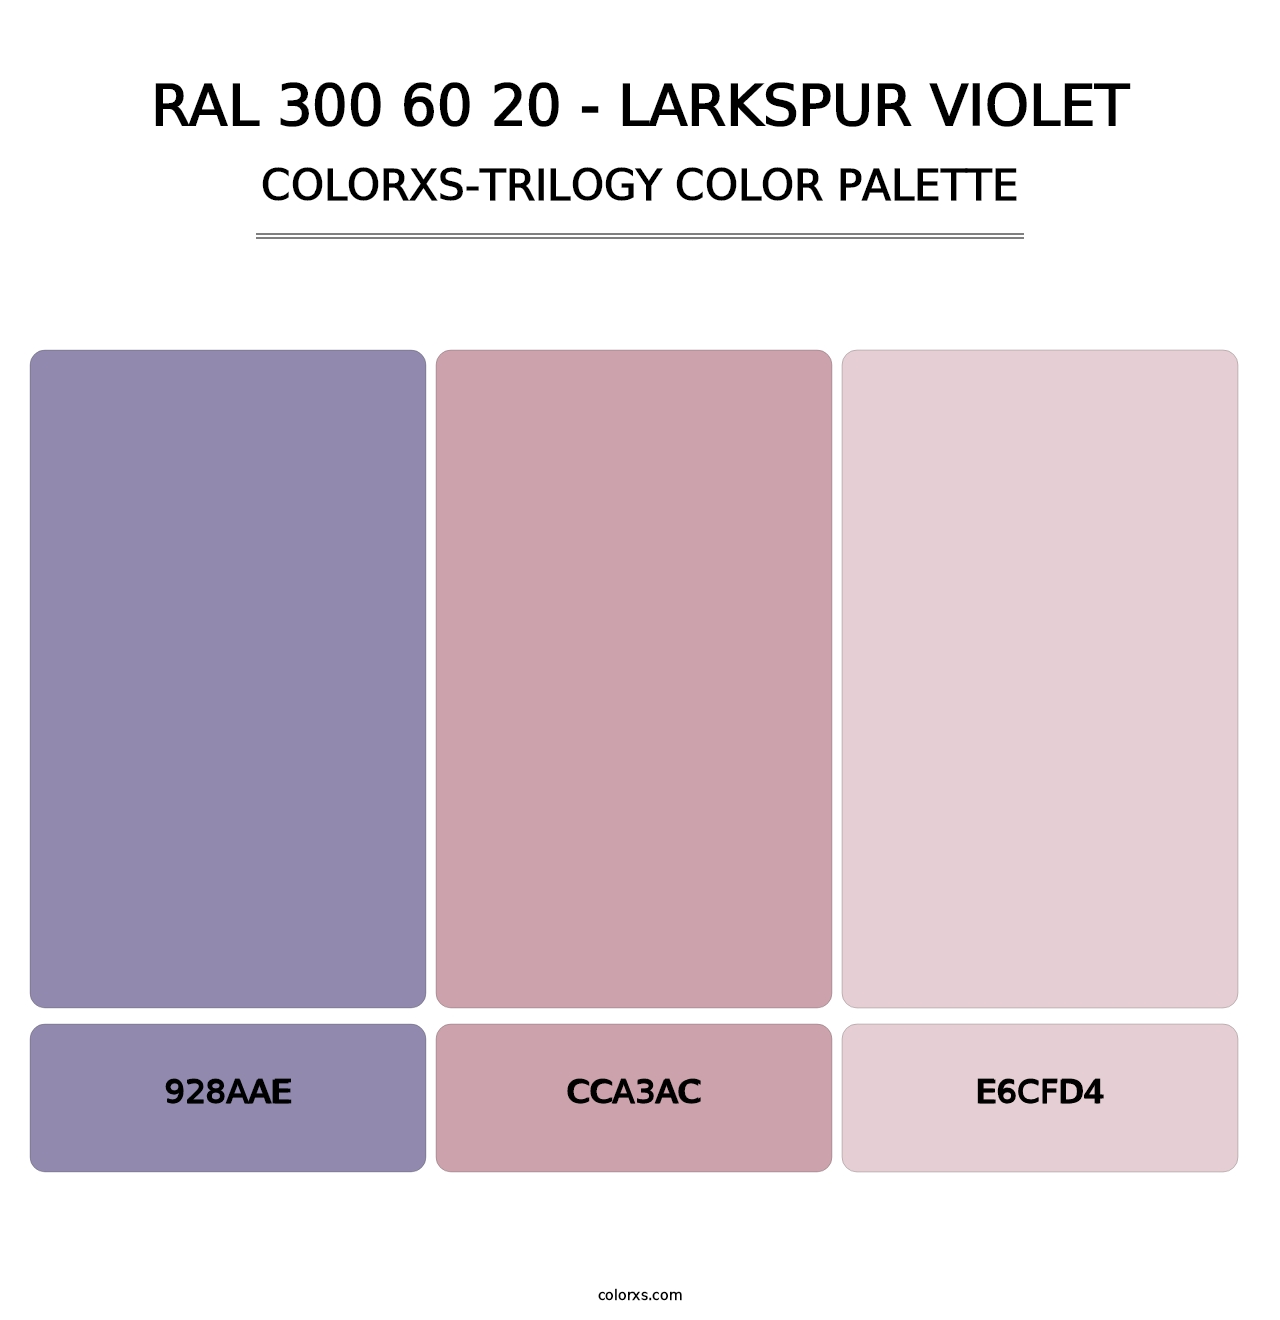 RAL 300 60 20 - Larkspur Violet - Colorxs Trilogy Palette